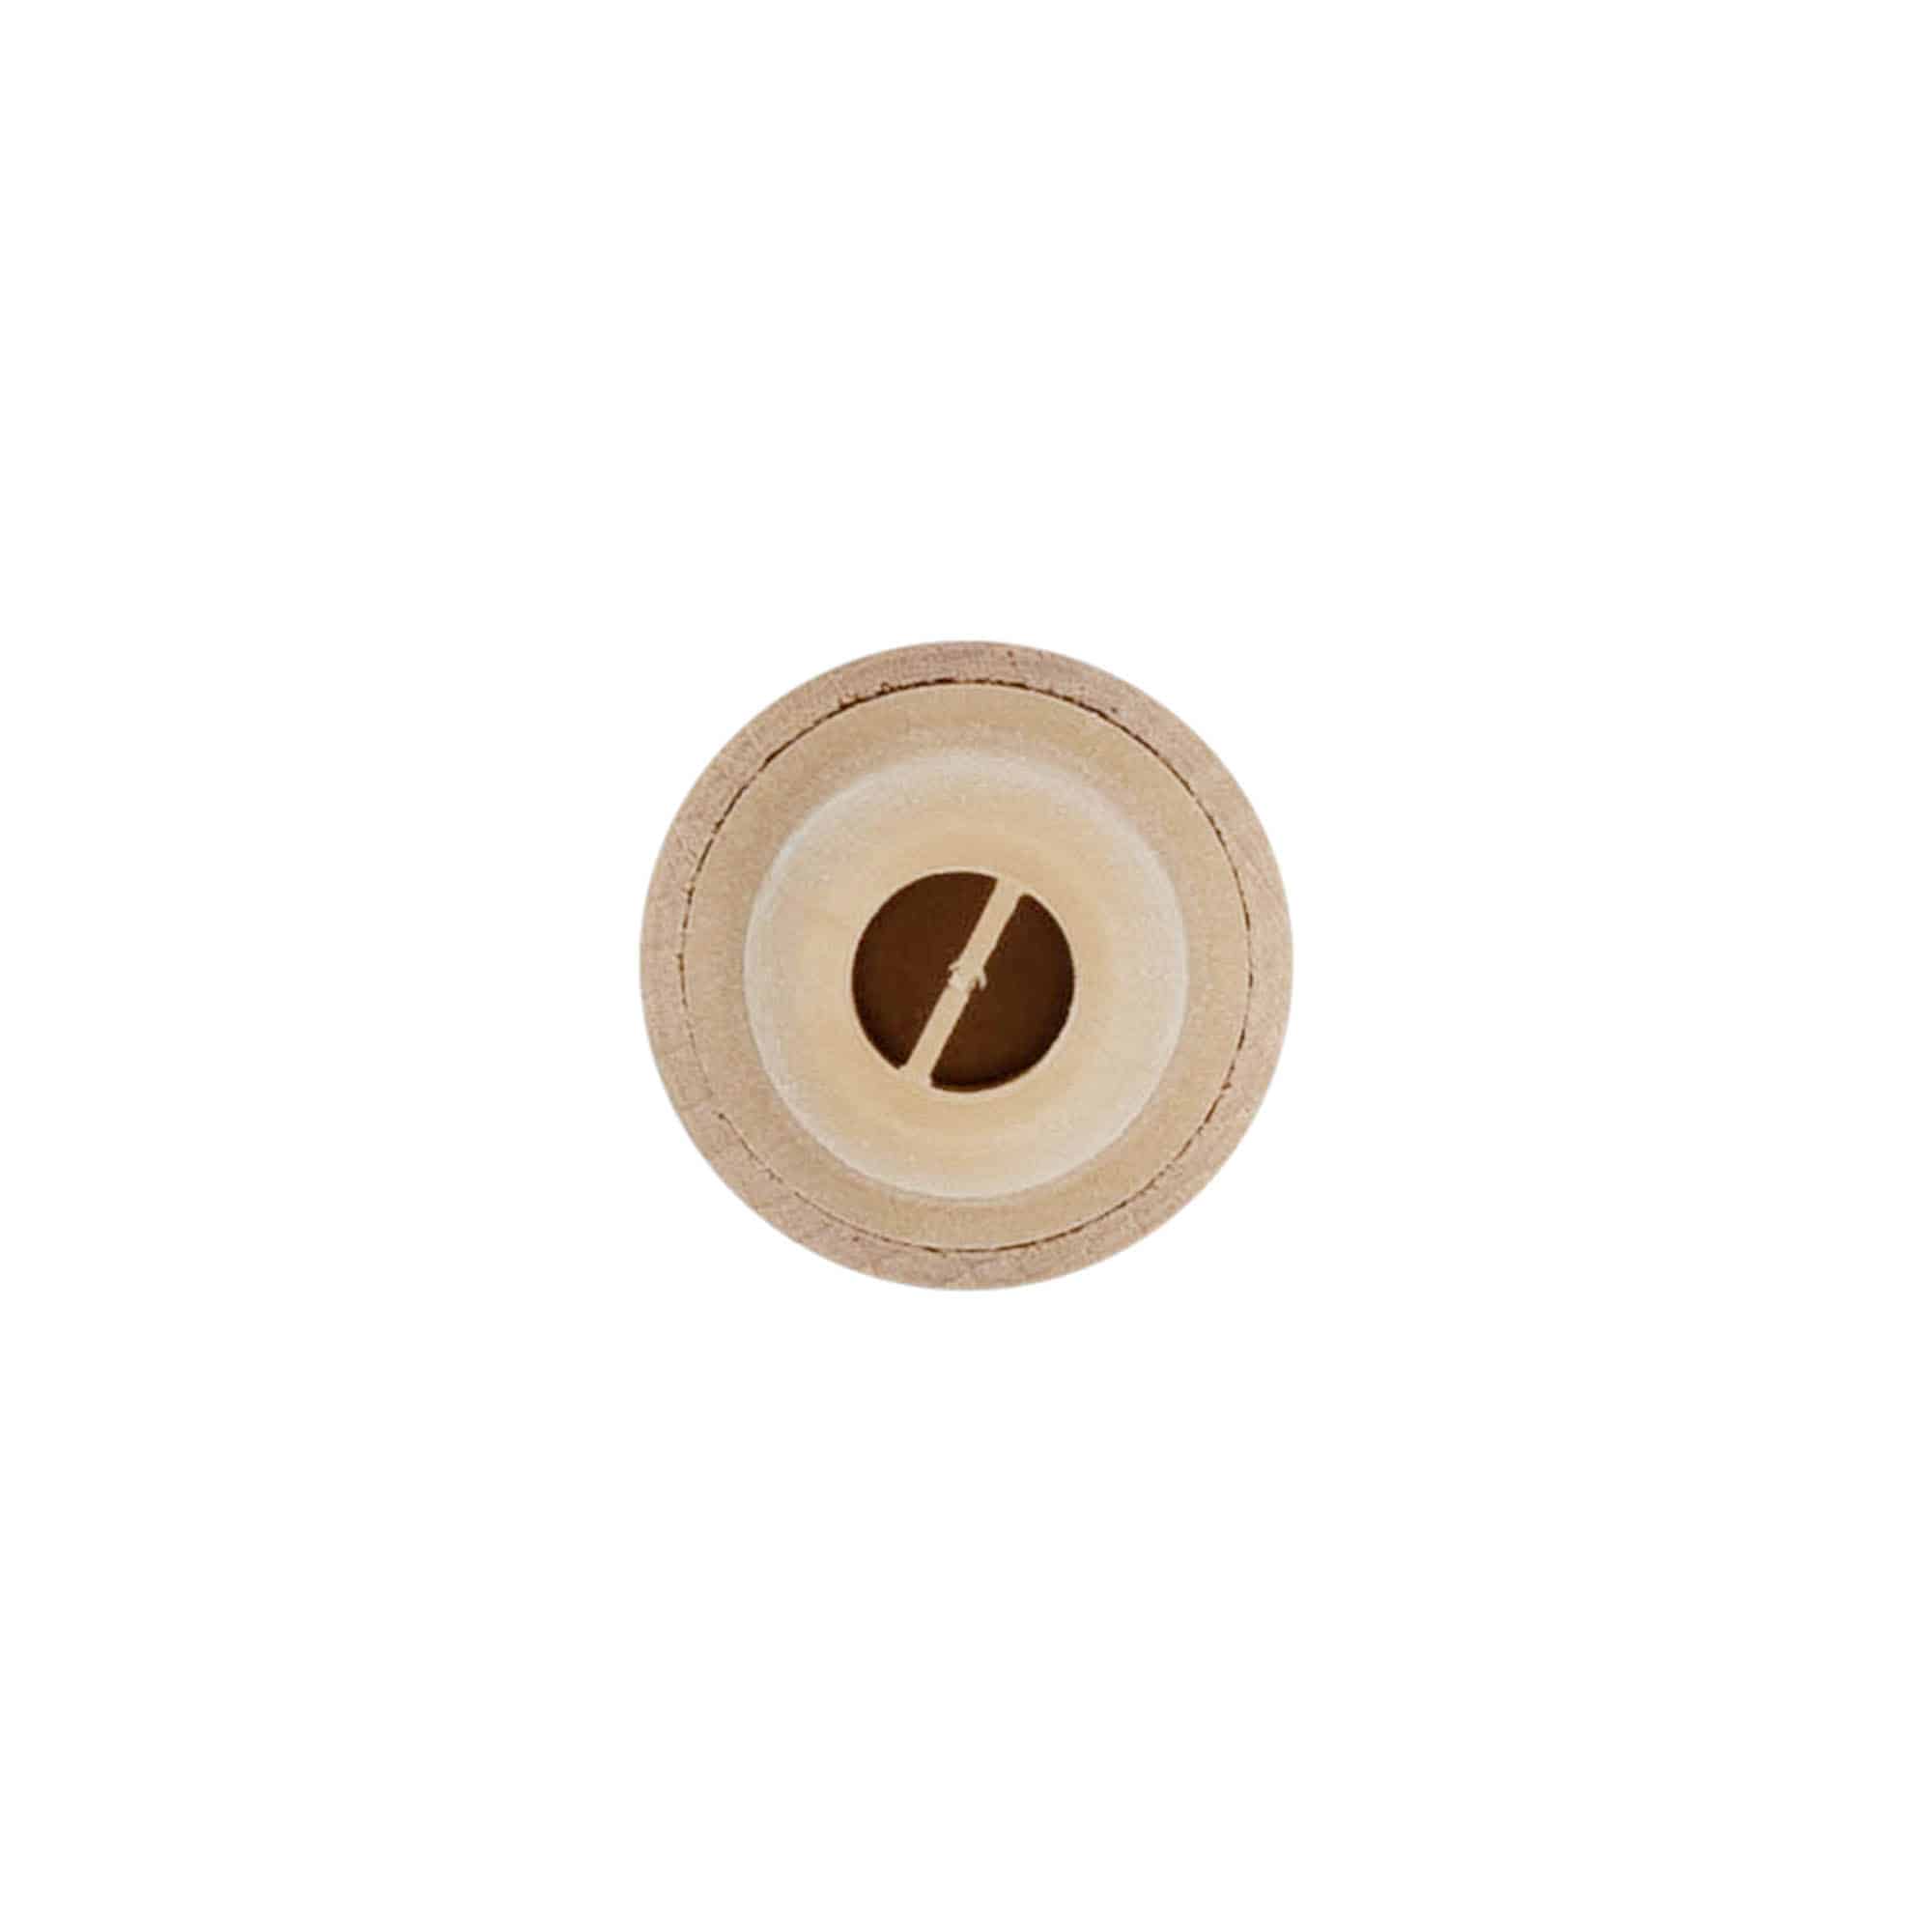 Korek s úchytem a dávkovacím otvorem 19 mm, plast-dřevo, barevný, pro uzávěr: korek